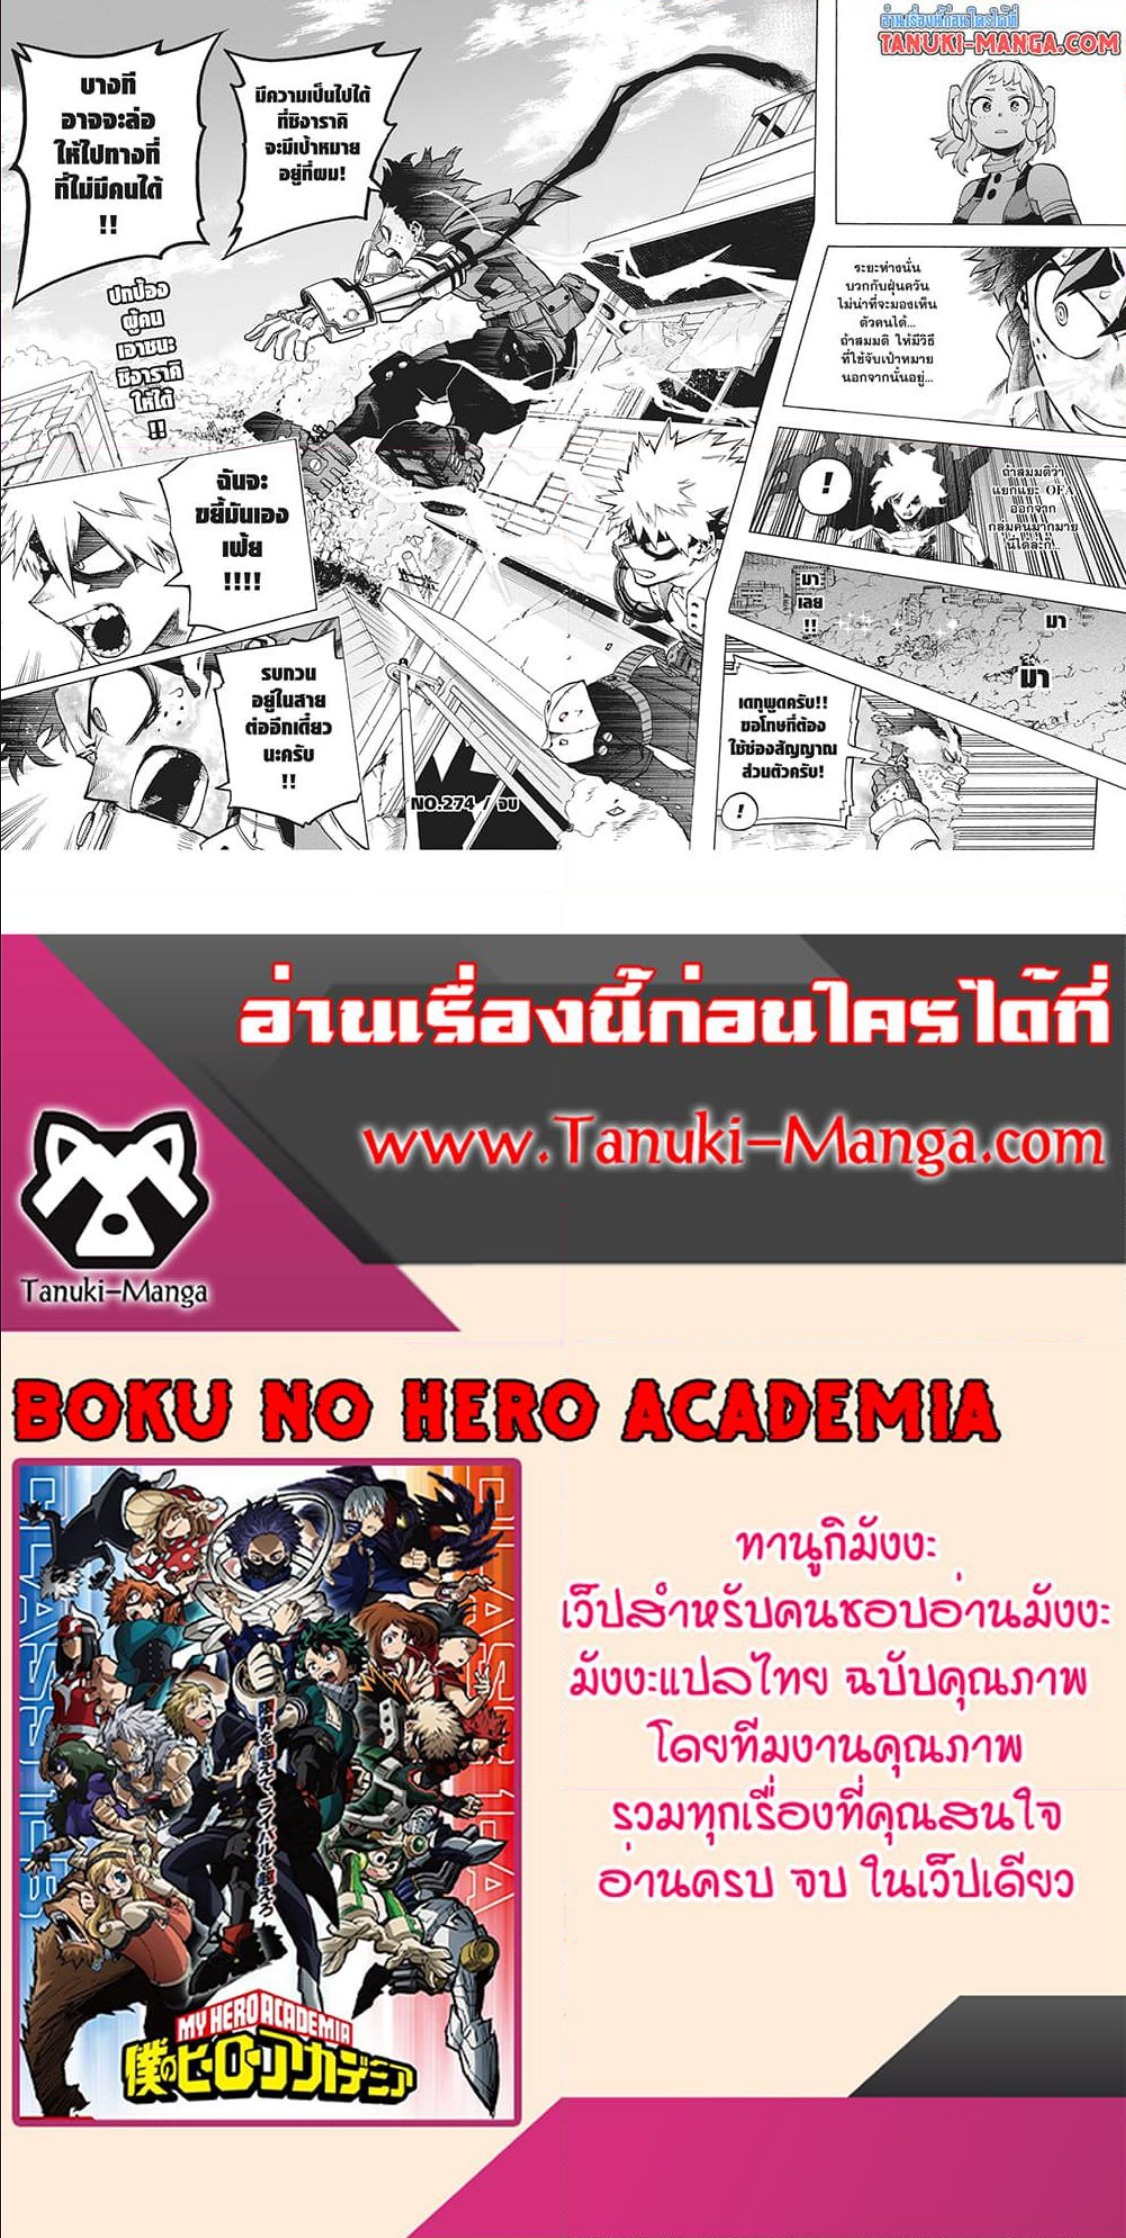 Boku no Hero Academia ร ยธโ€ขร ยธยญร ยธโขร ยธโ€”ร ยธยตร ยนห 274 (3)